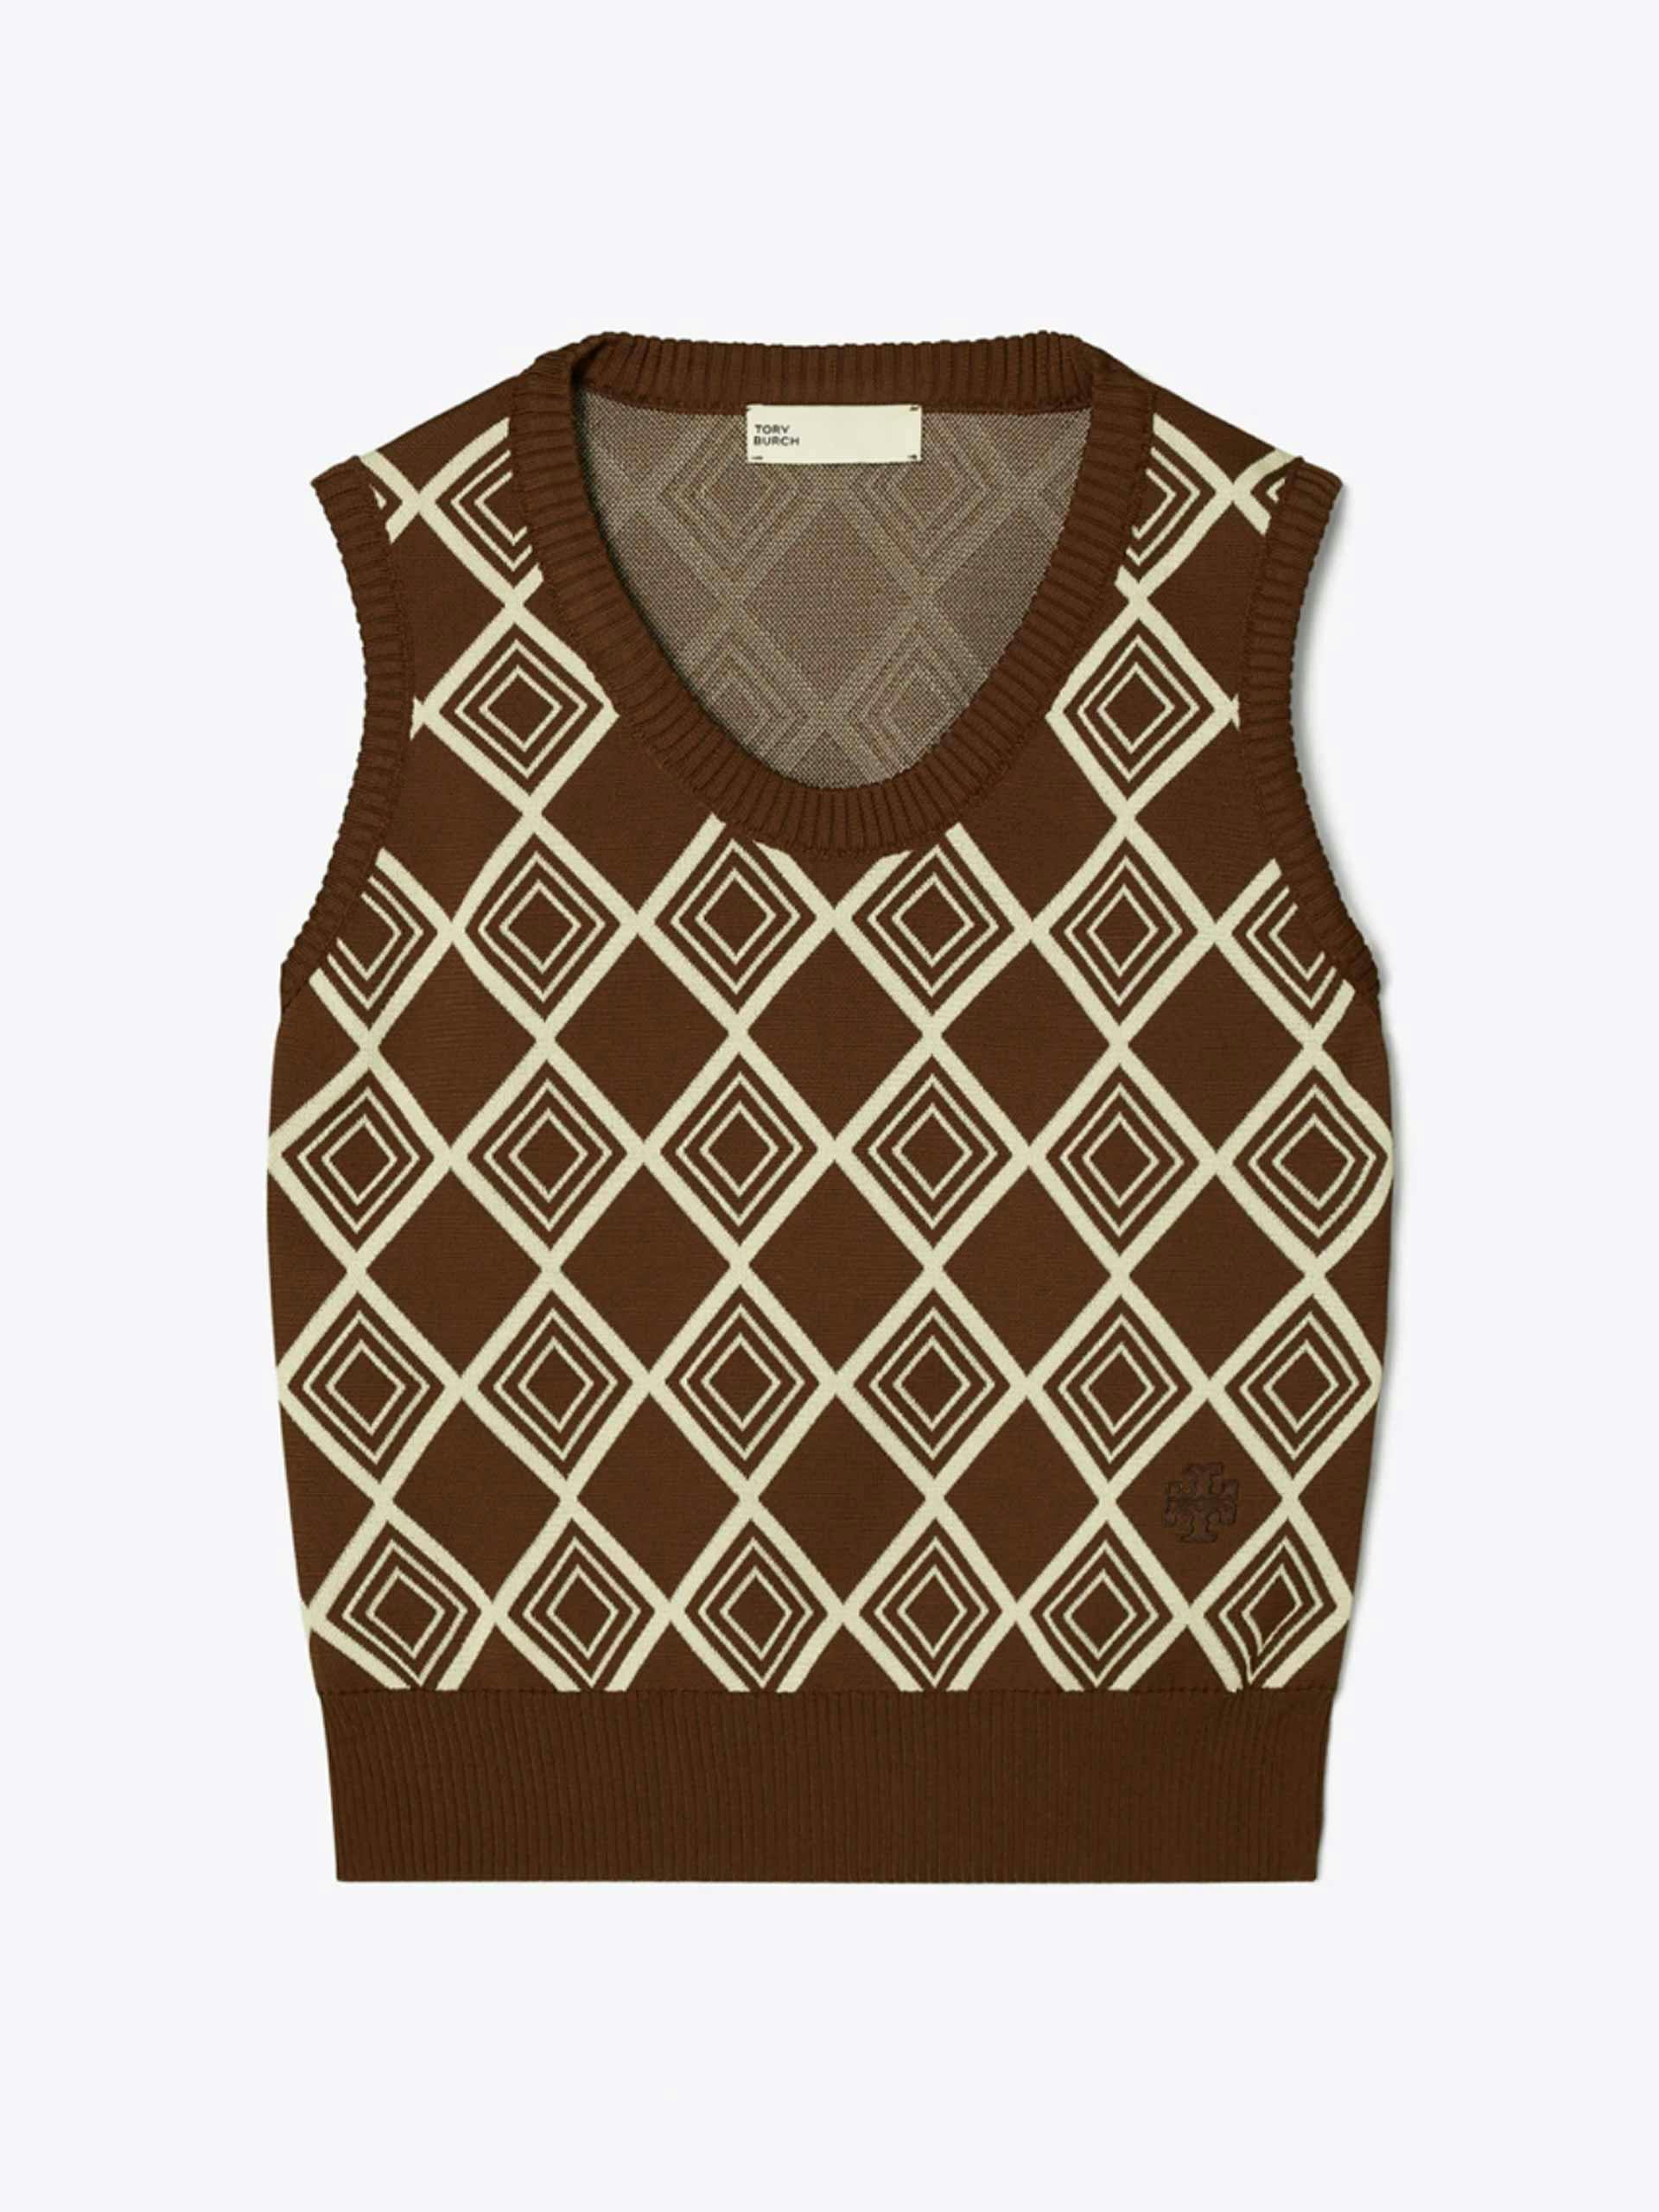 Brown jacquard knit vest